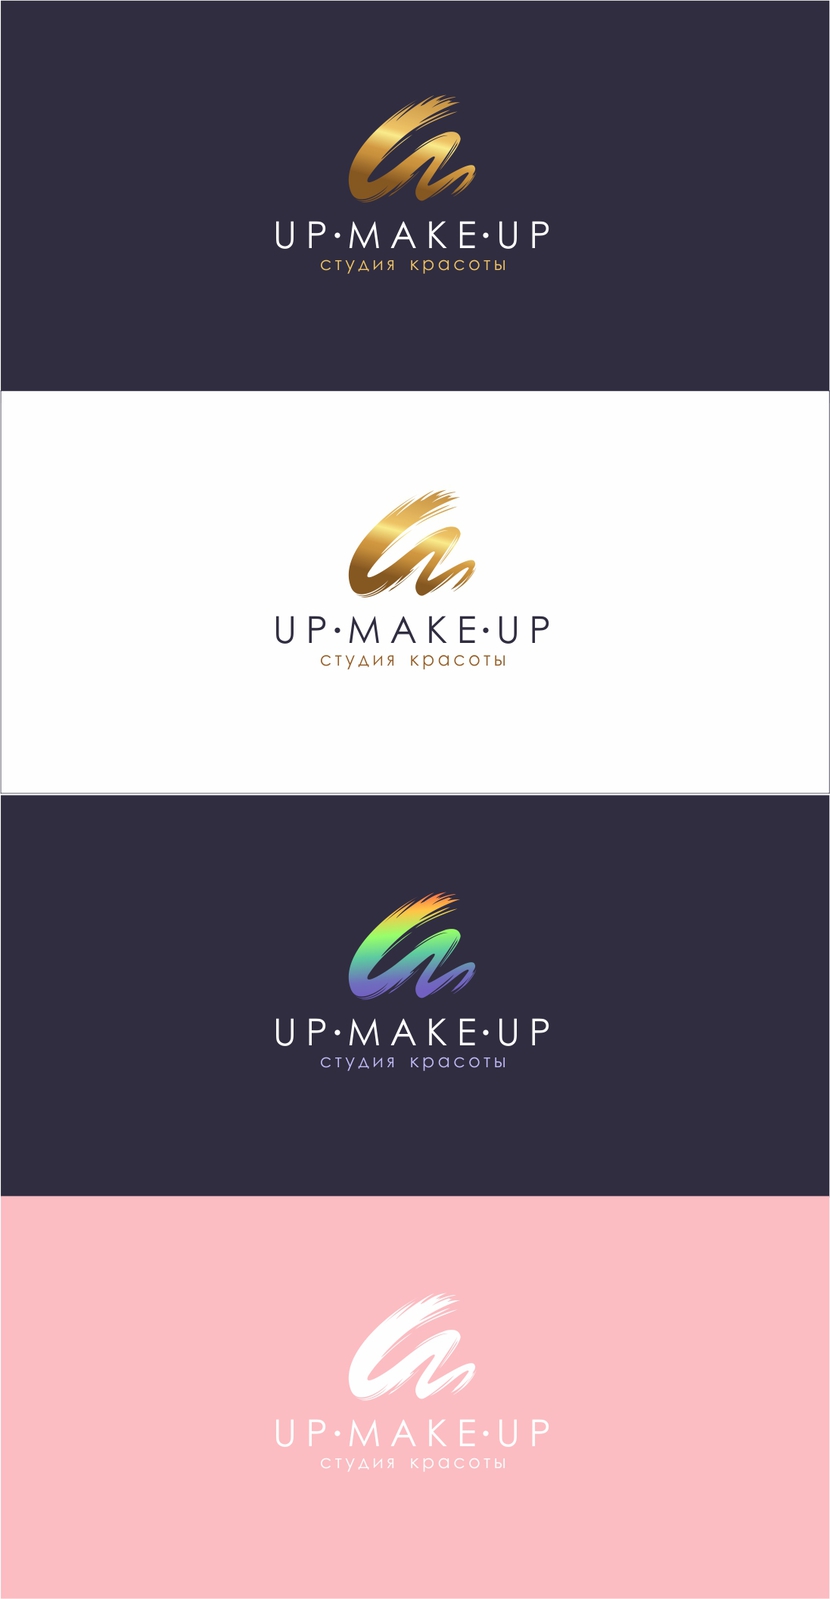 2 - Логотип и фирменный стиль студии красоты "UP-MAKE-UP"